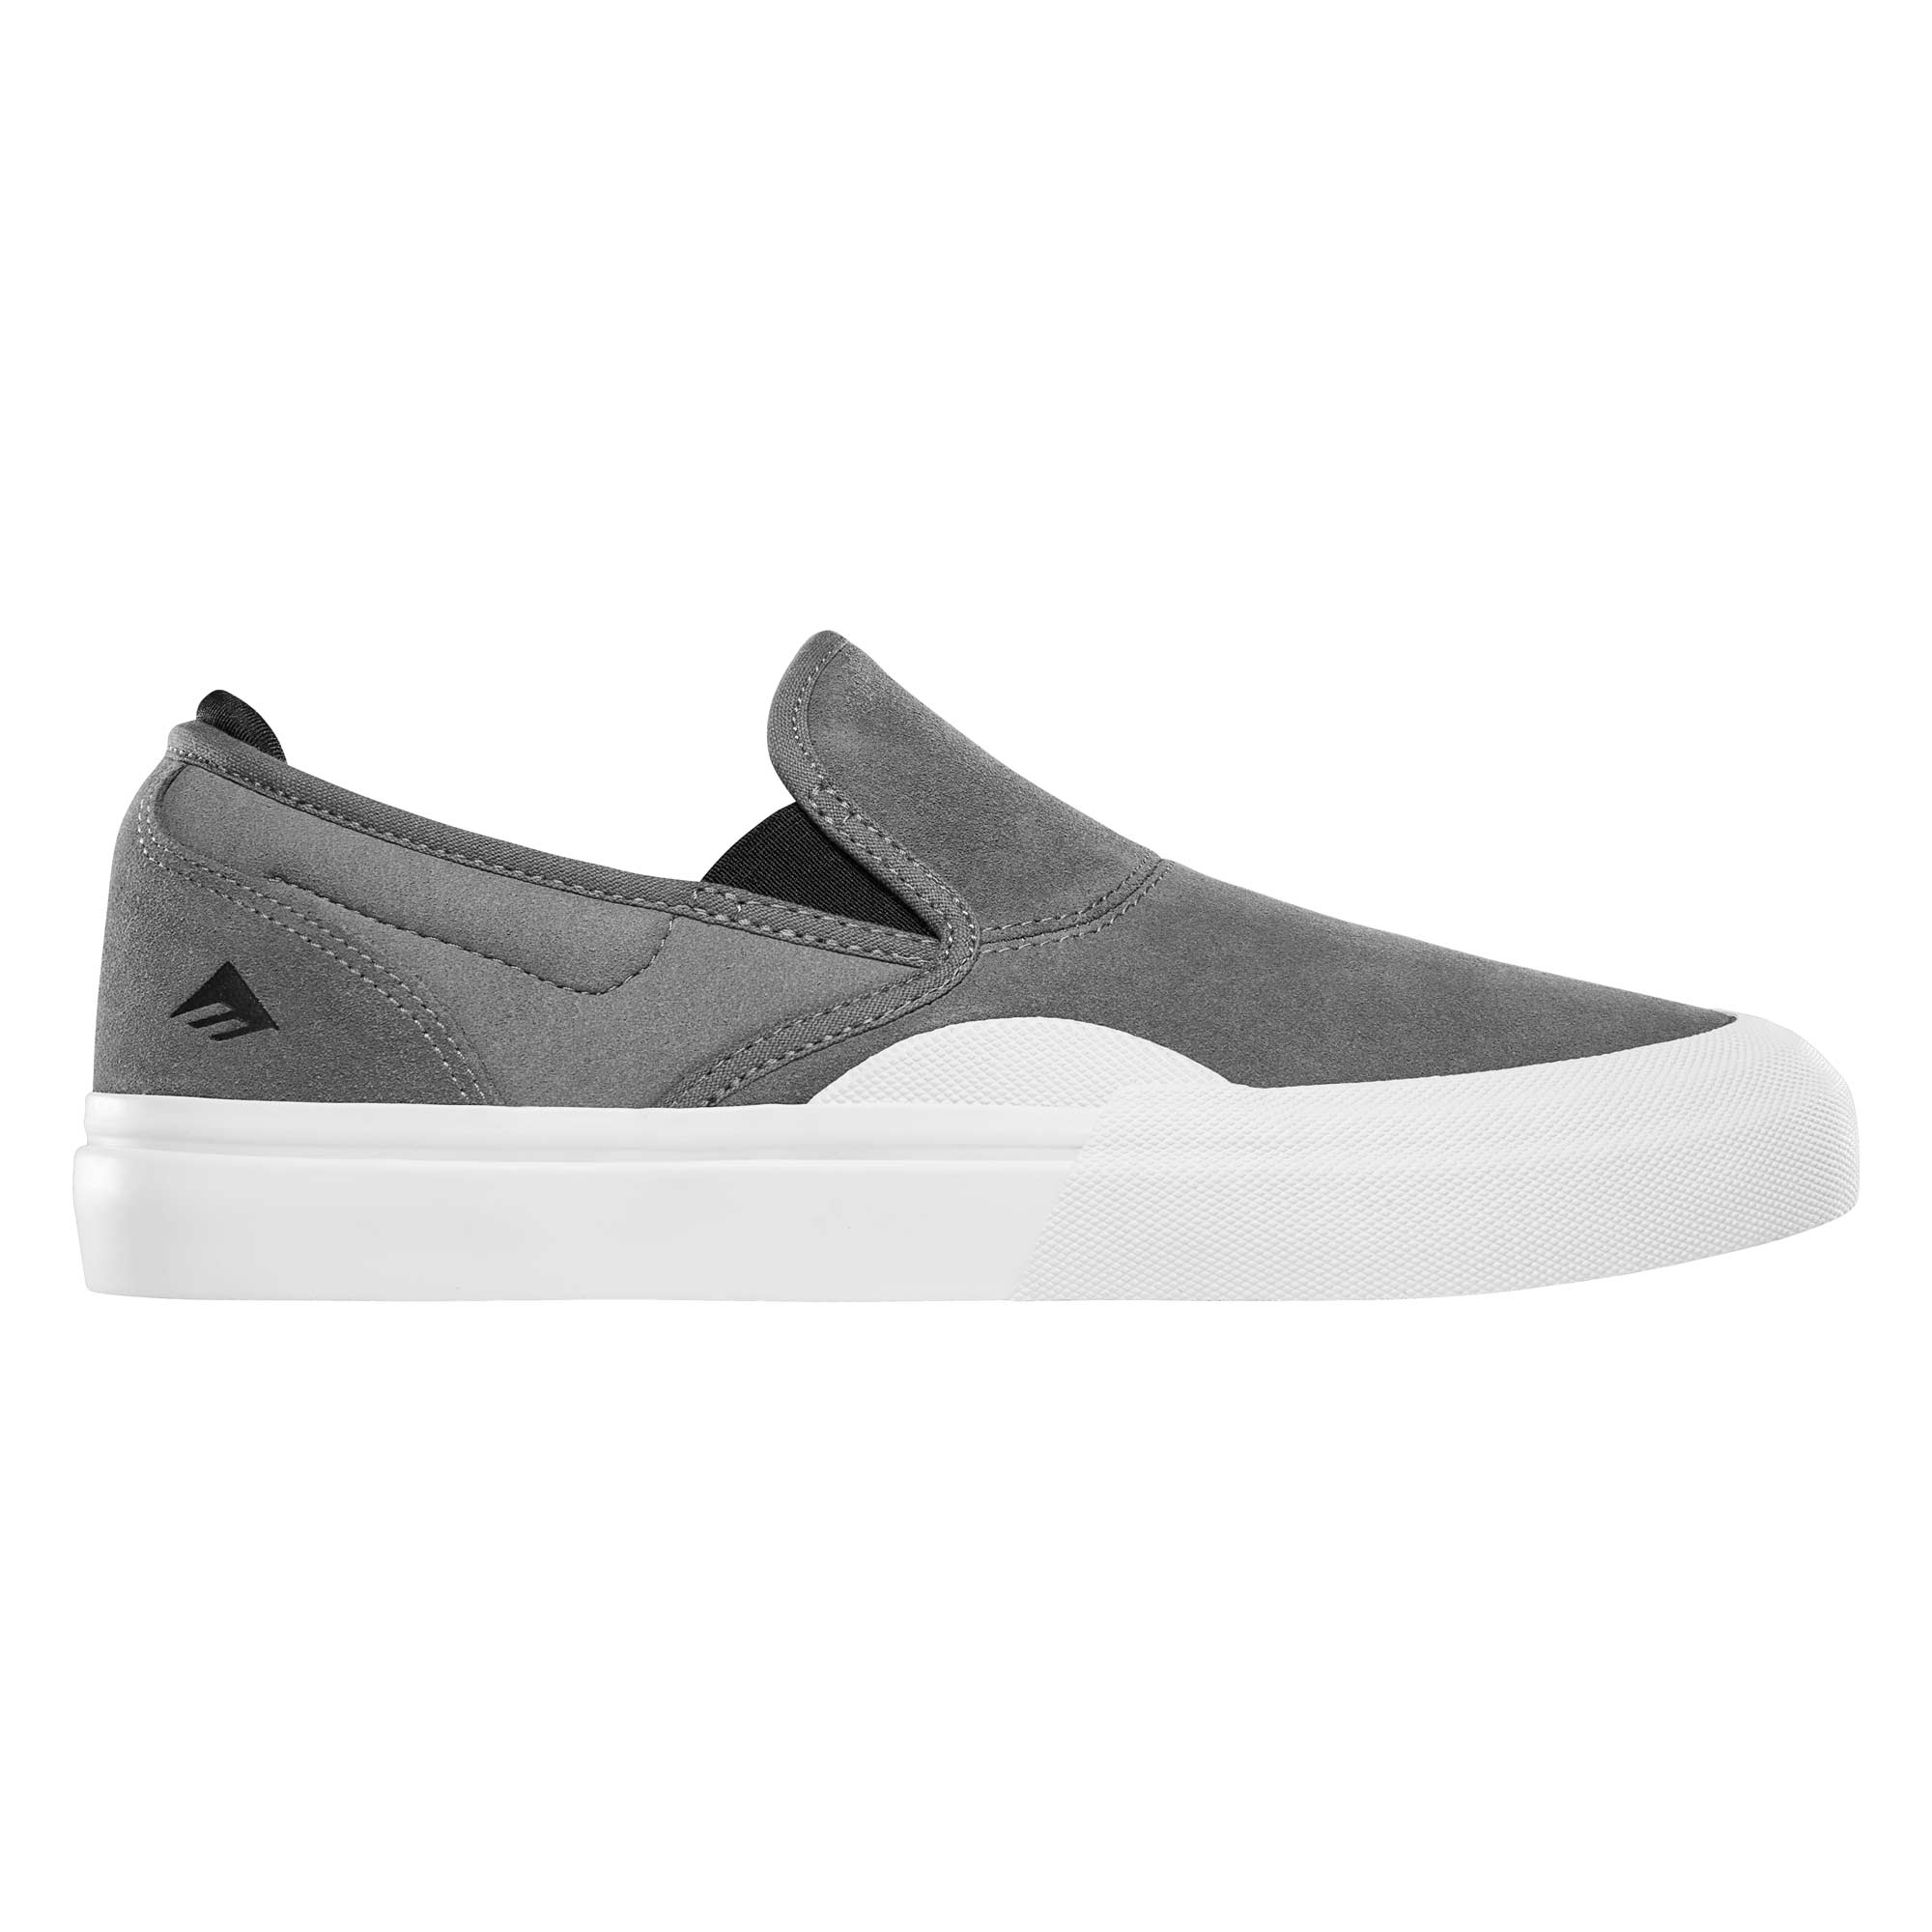 EMERICA Shoe WINO G6 SLIP-ON gry/bla/whi grey/black/white